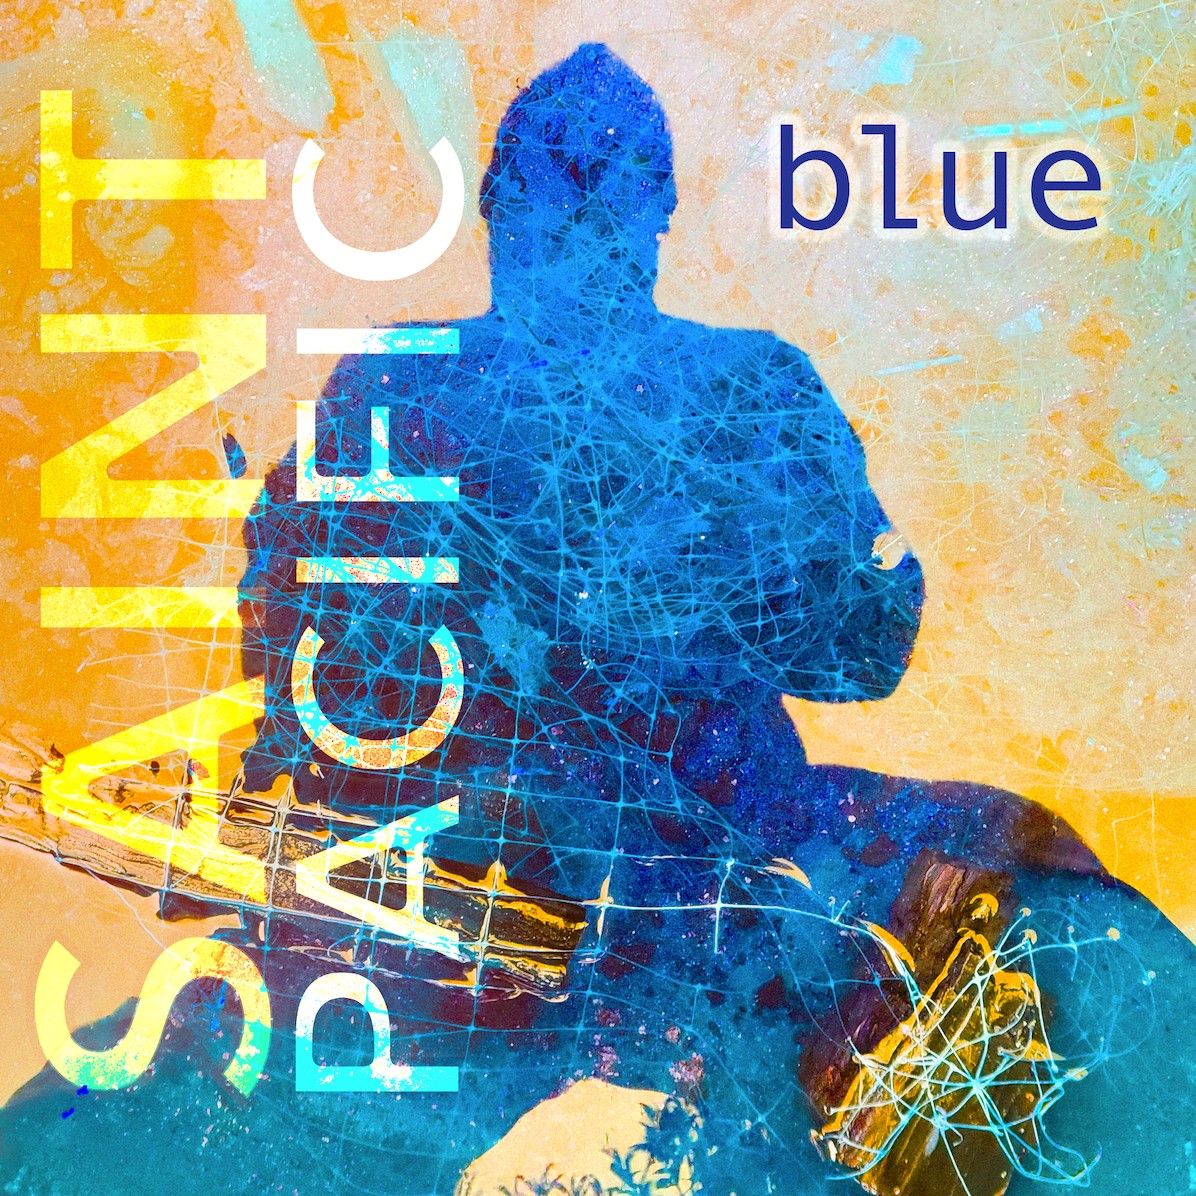 Saint Pacific ‘Blue’ album artwork